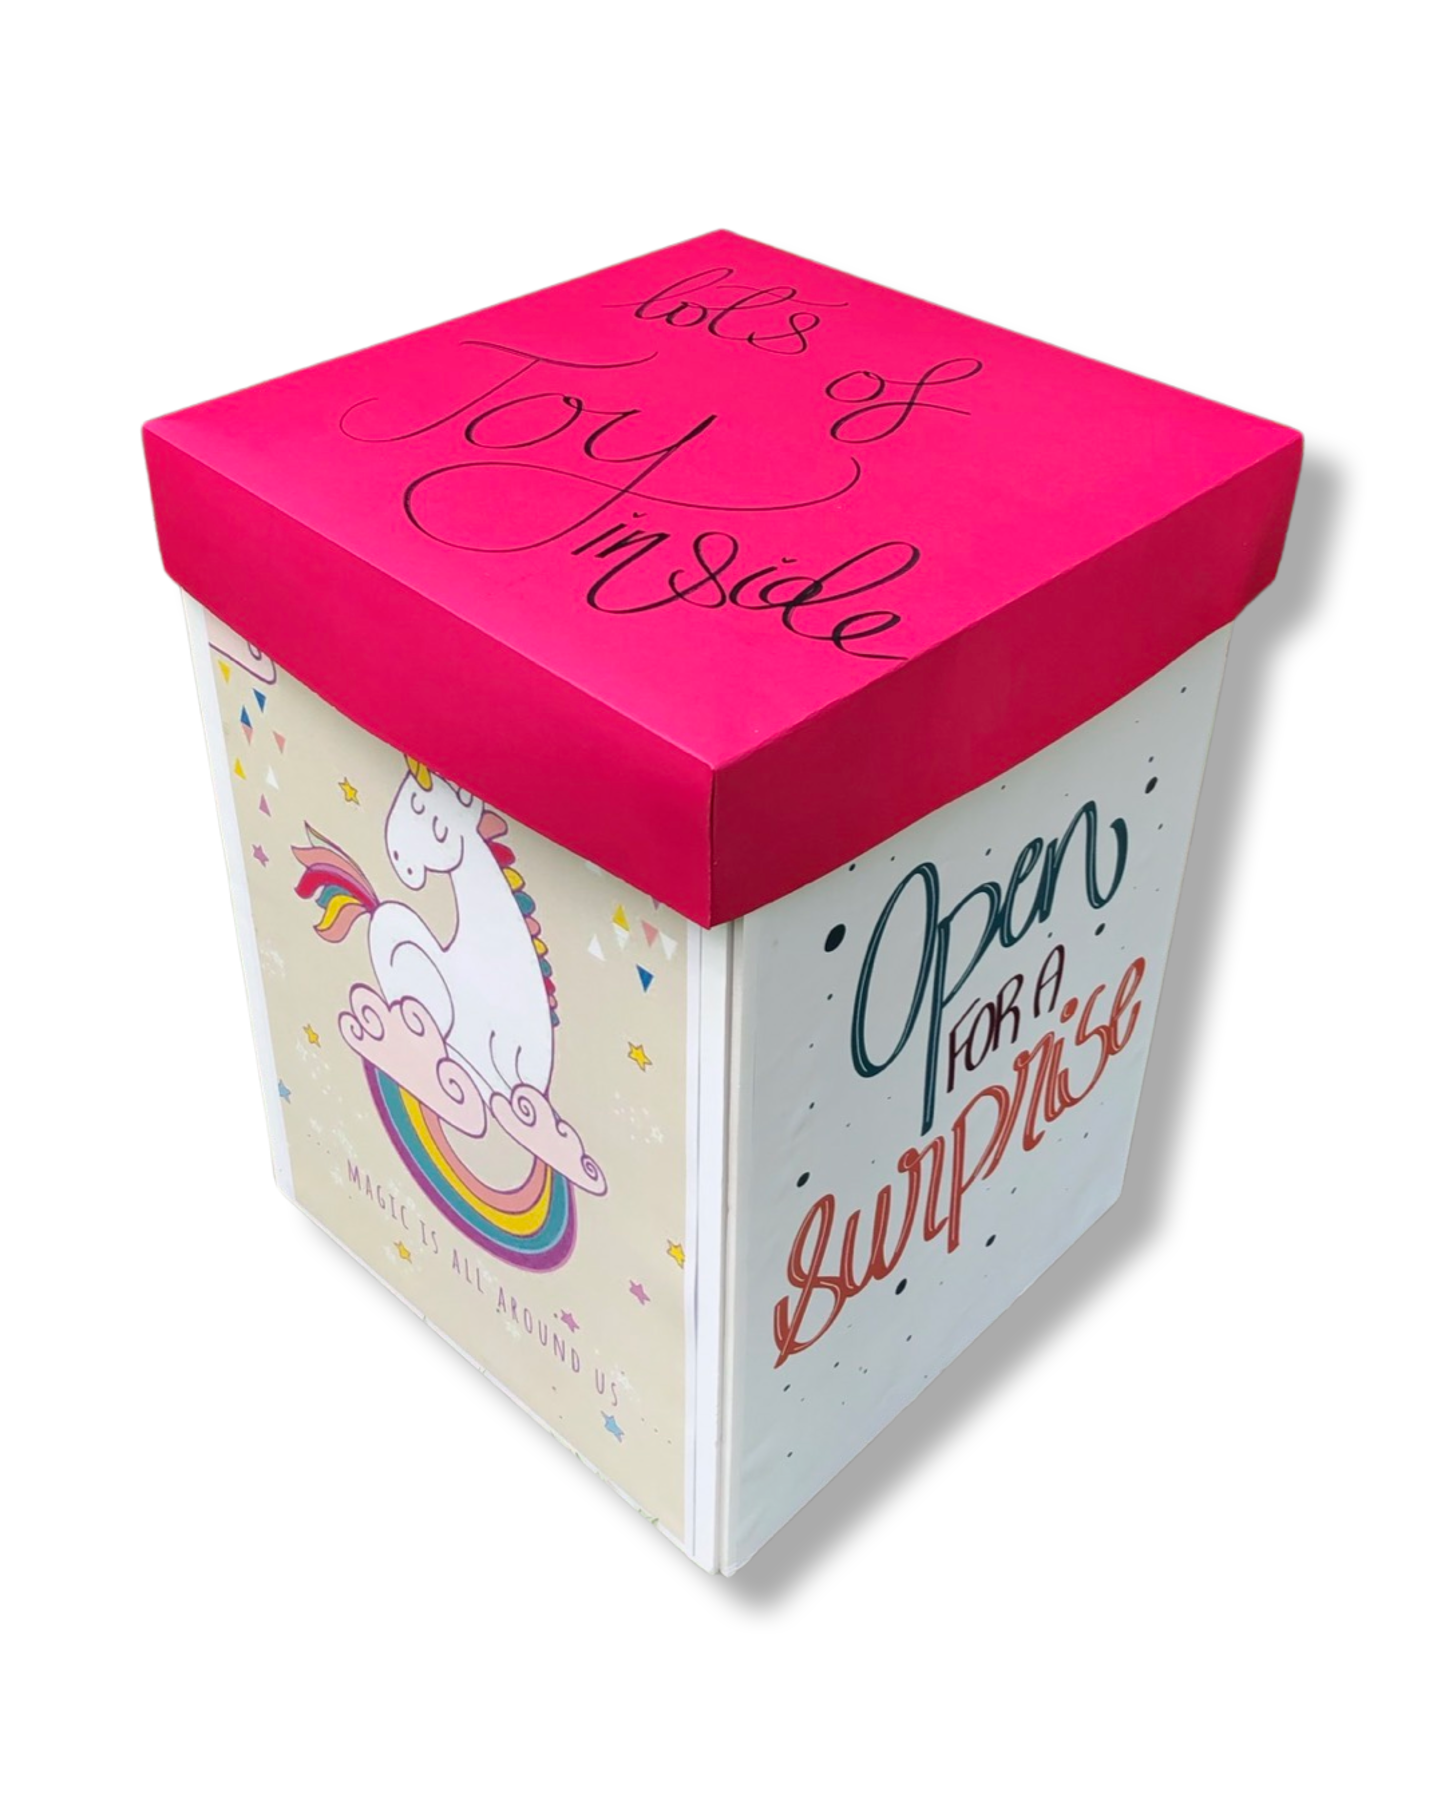 Peppa Pig Themed Surprise Box